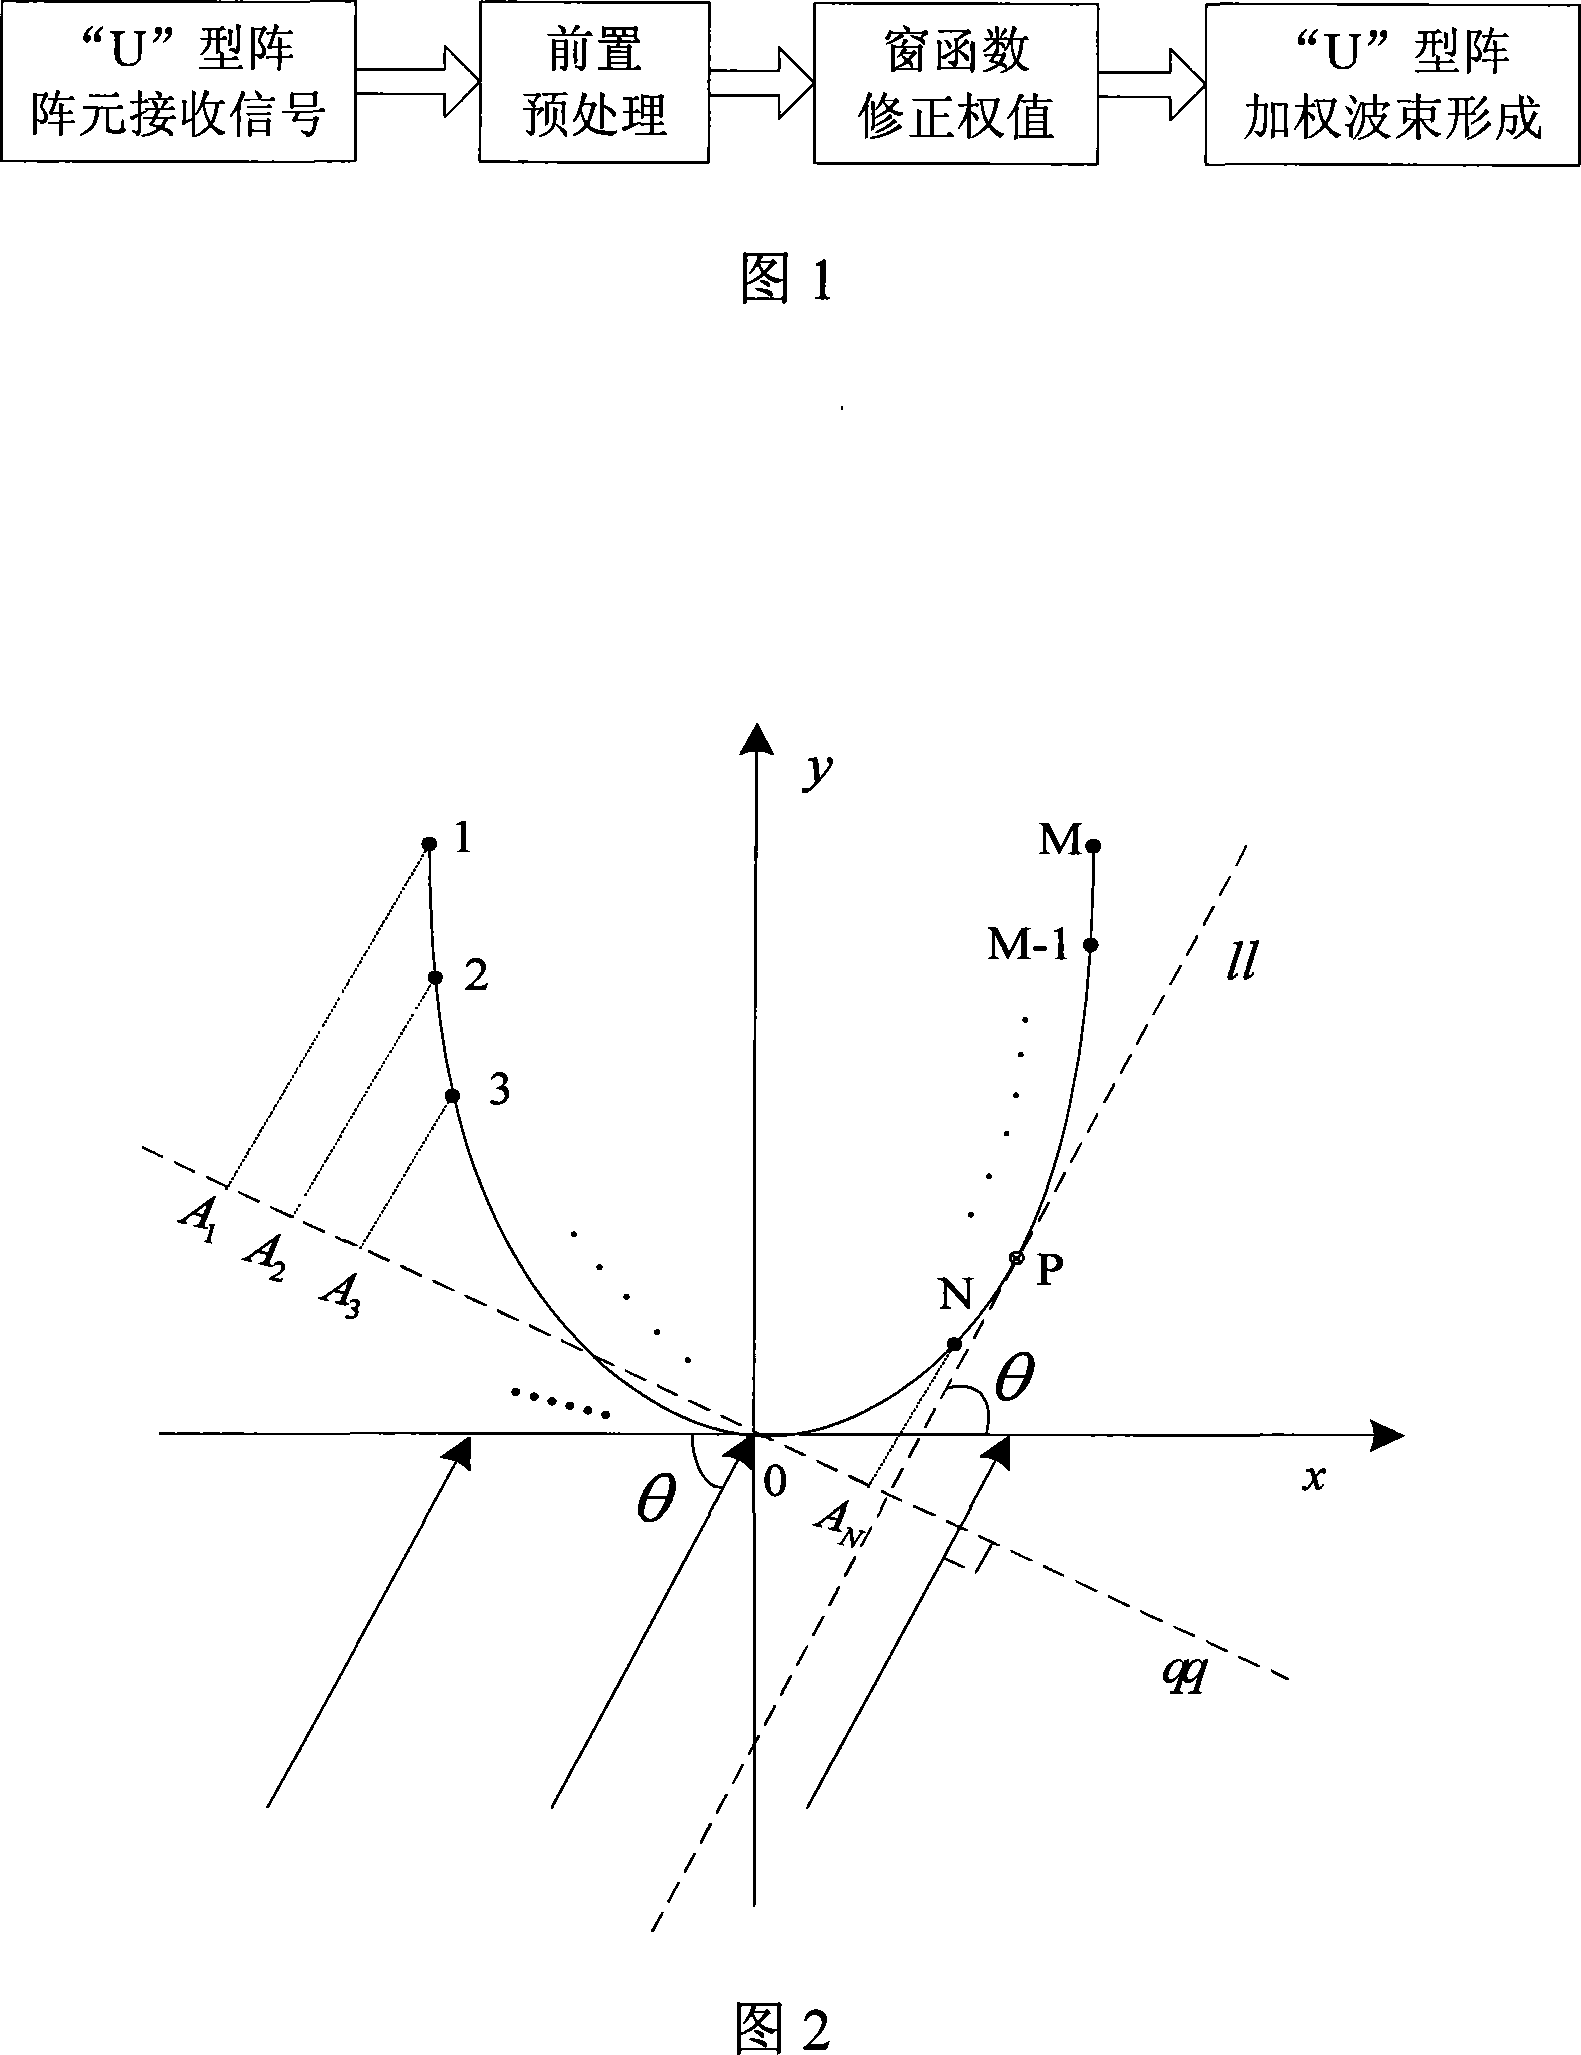 U-shaped array beam forming weighting method